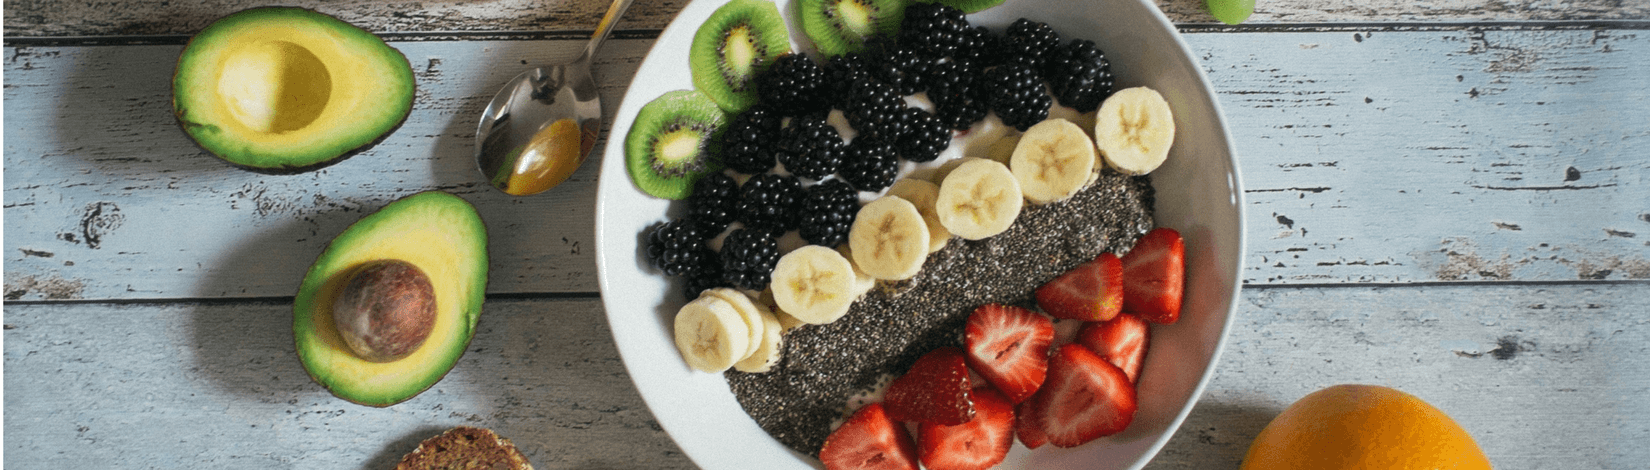 image of healthy breakfast fruit